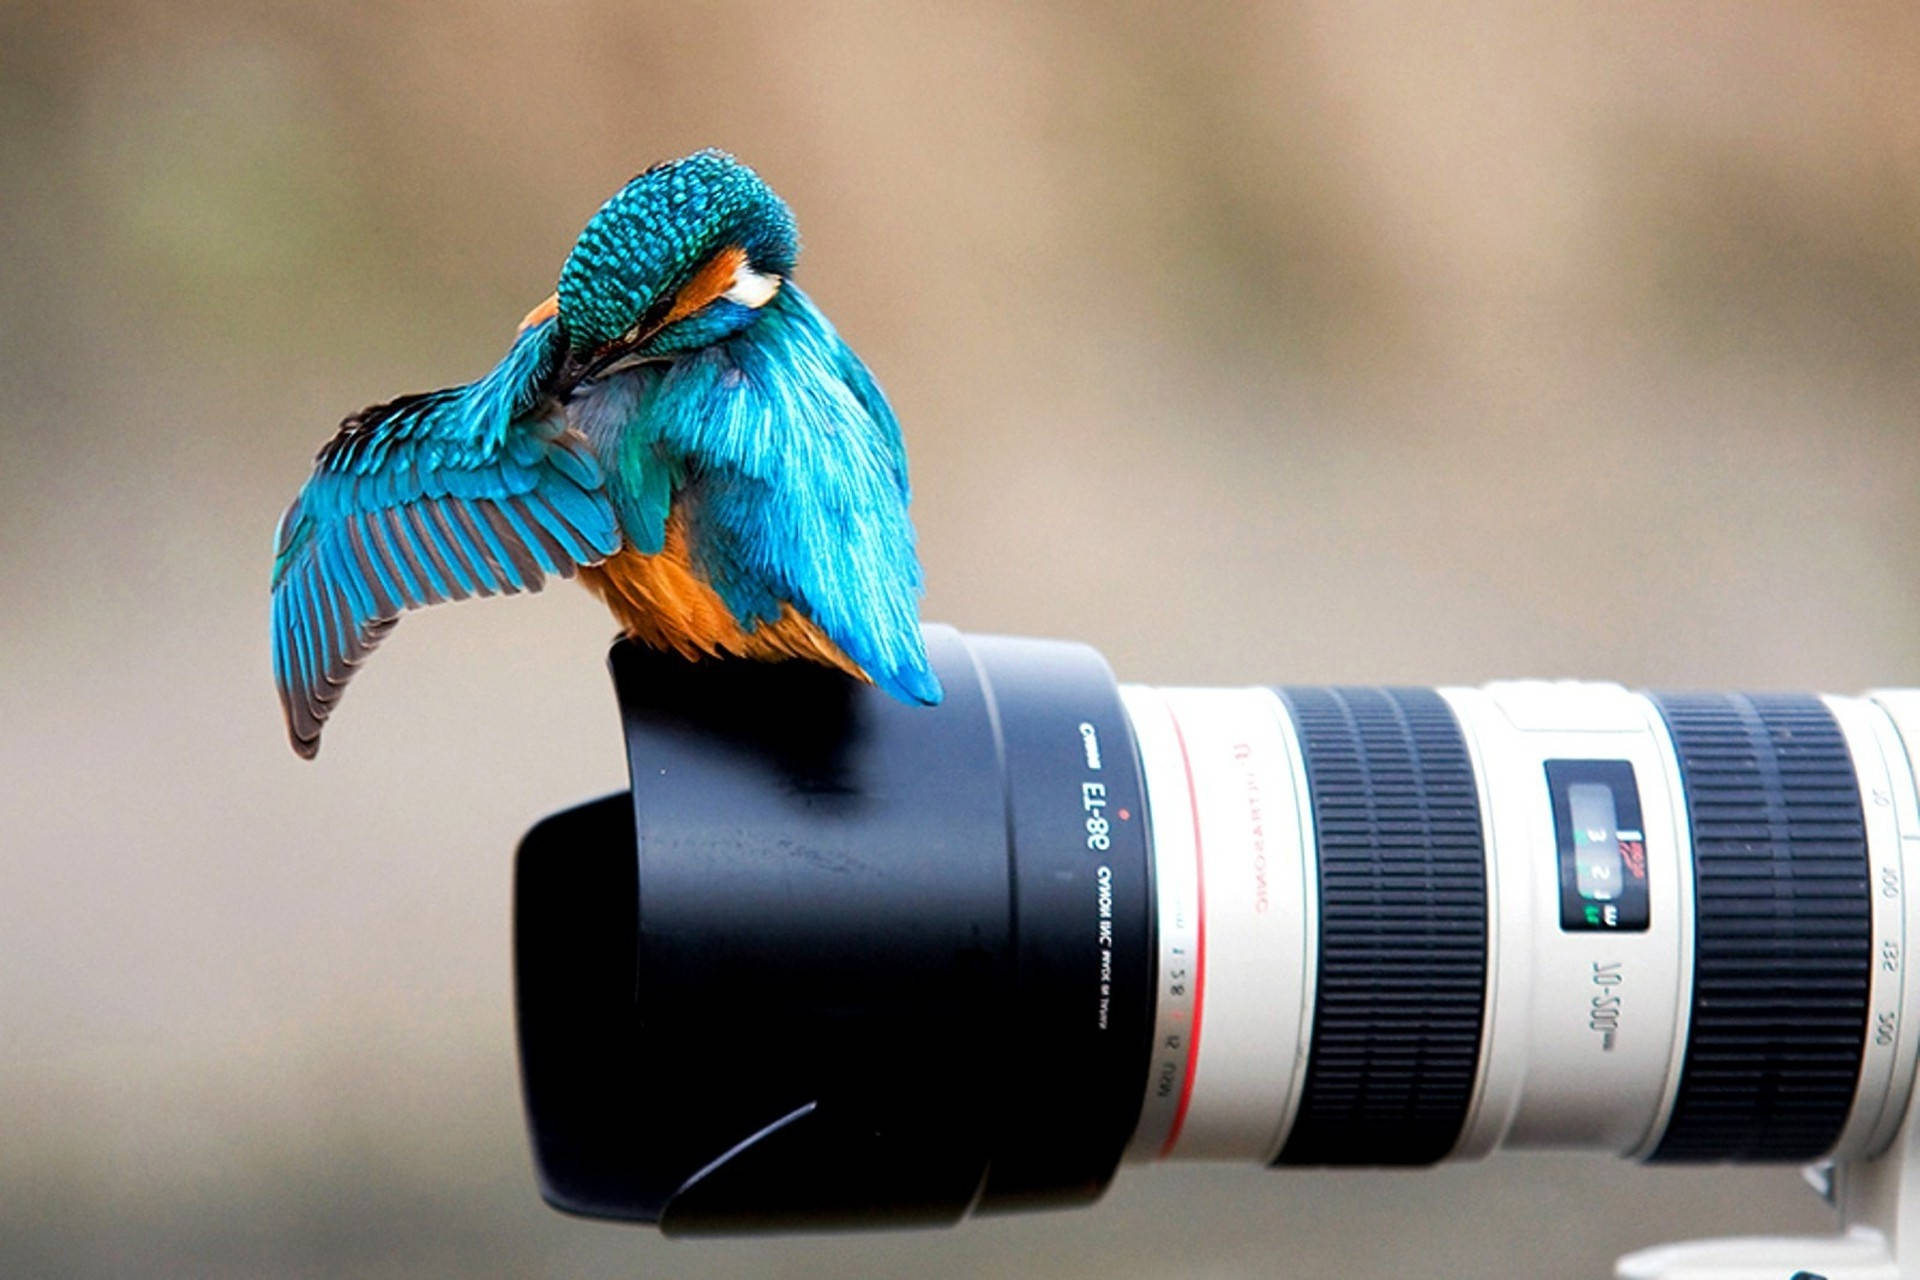 Hd Camera With Kingfisher Bird Wallpaper